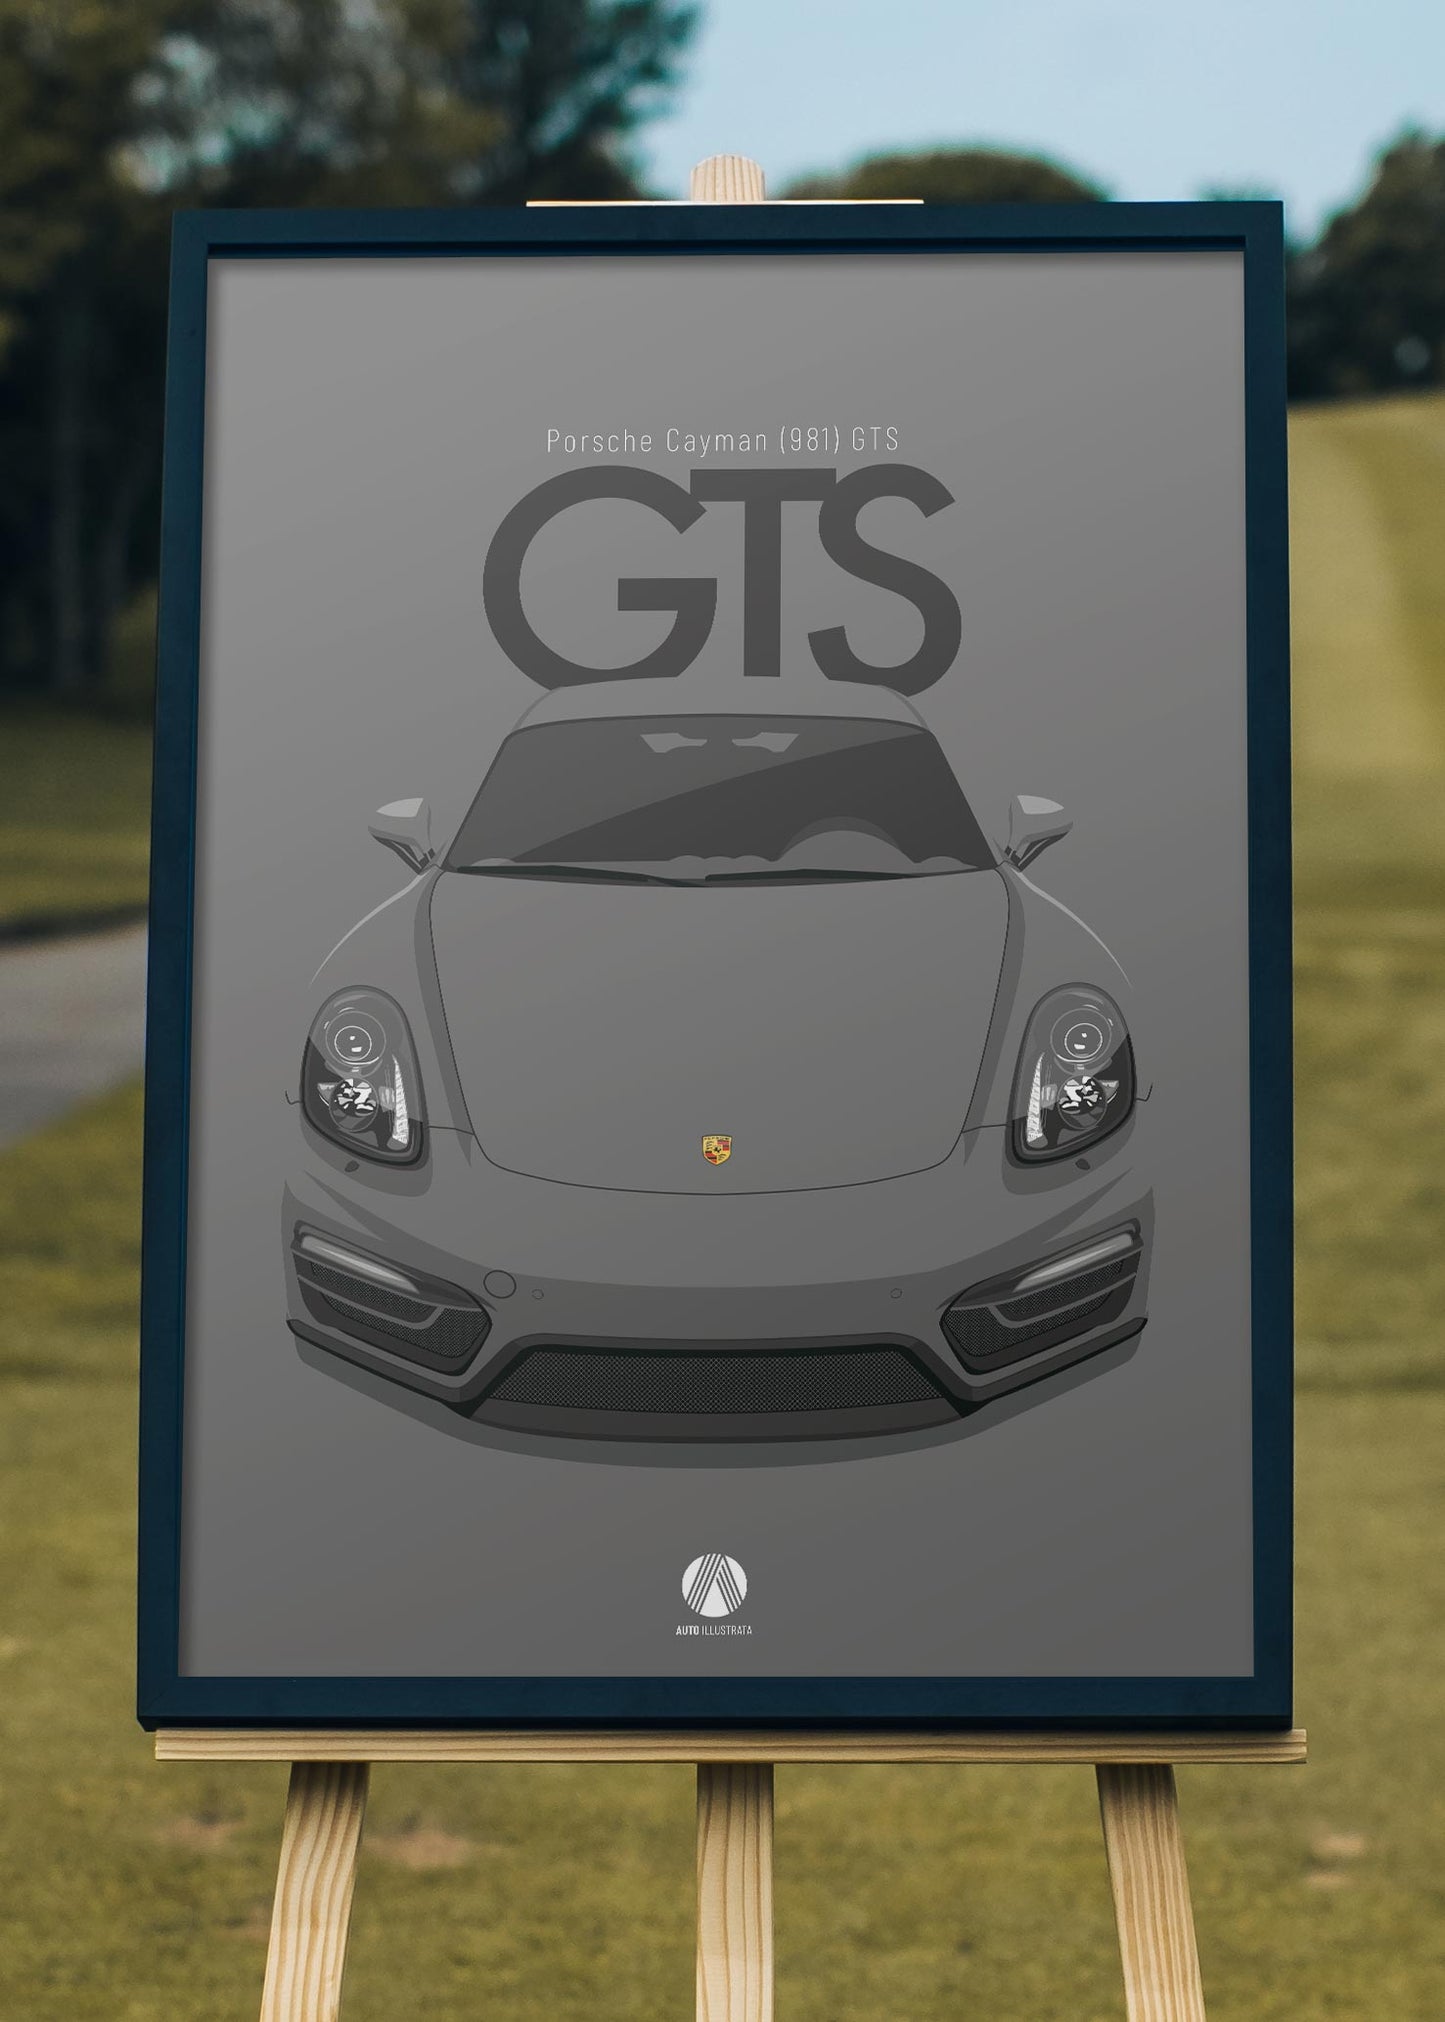 2015 Porsche Cayman (981) GTS - Agate Grey - poster print